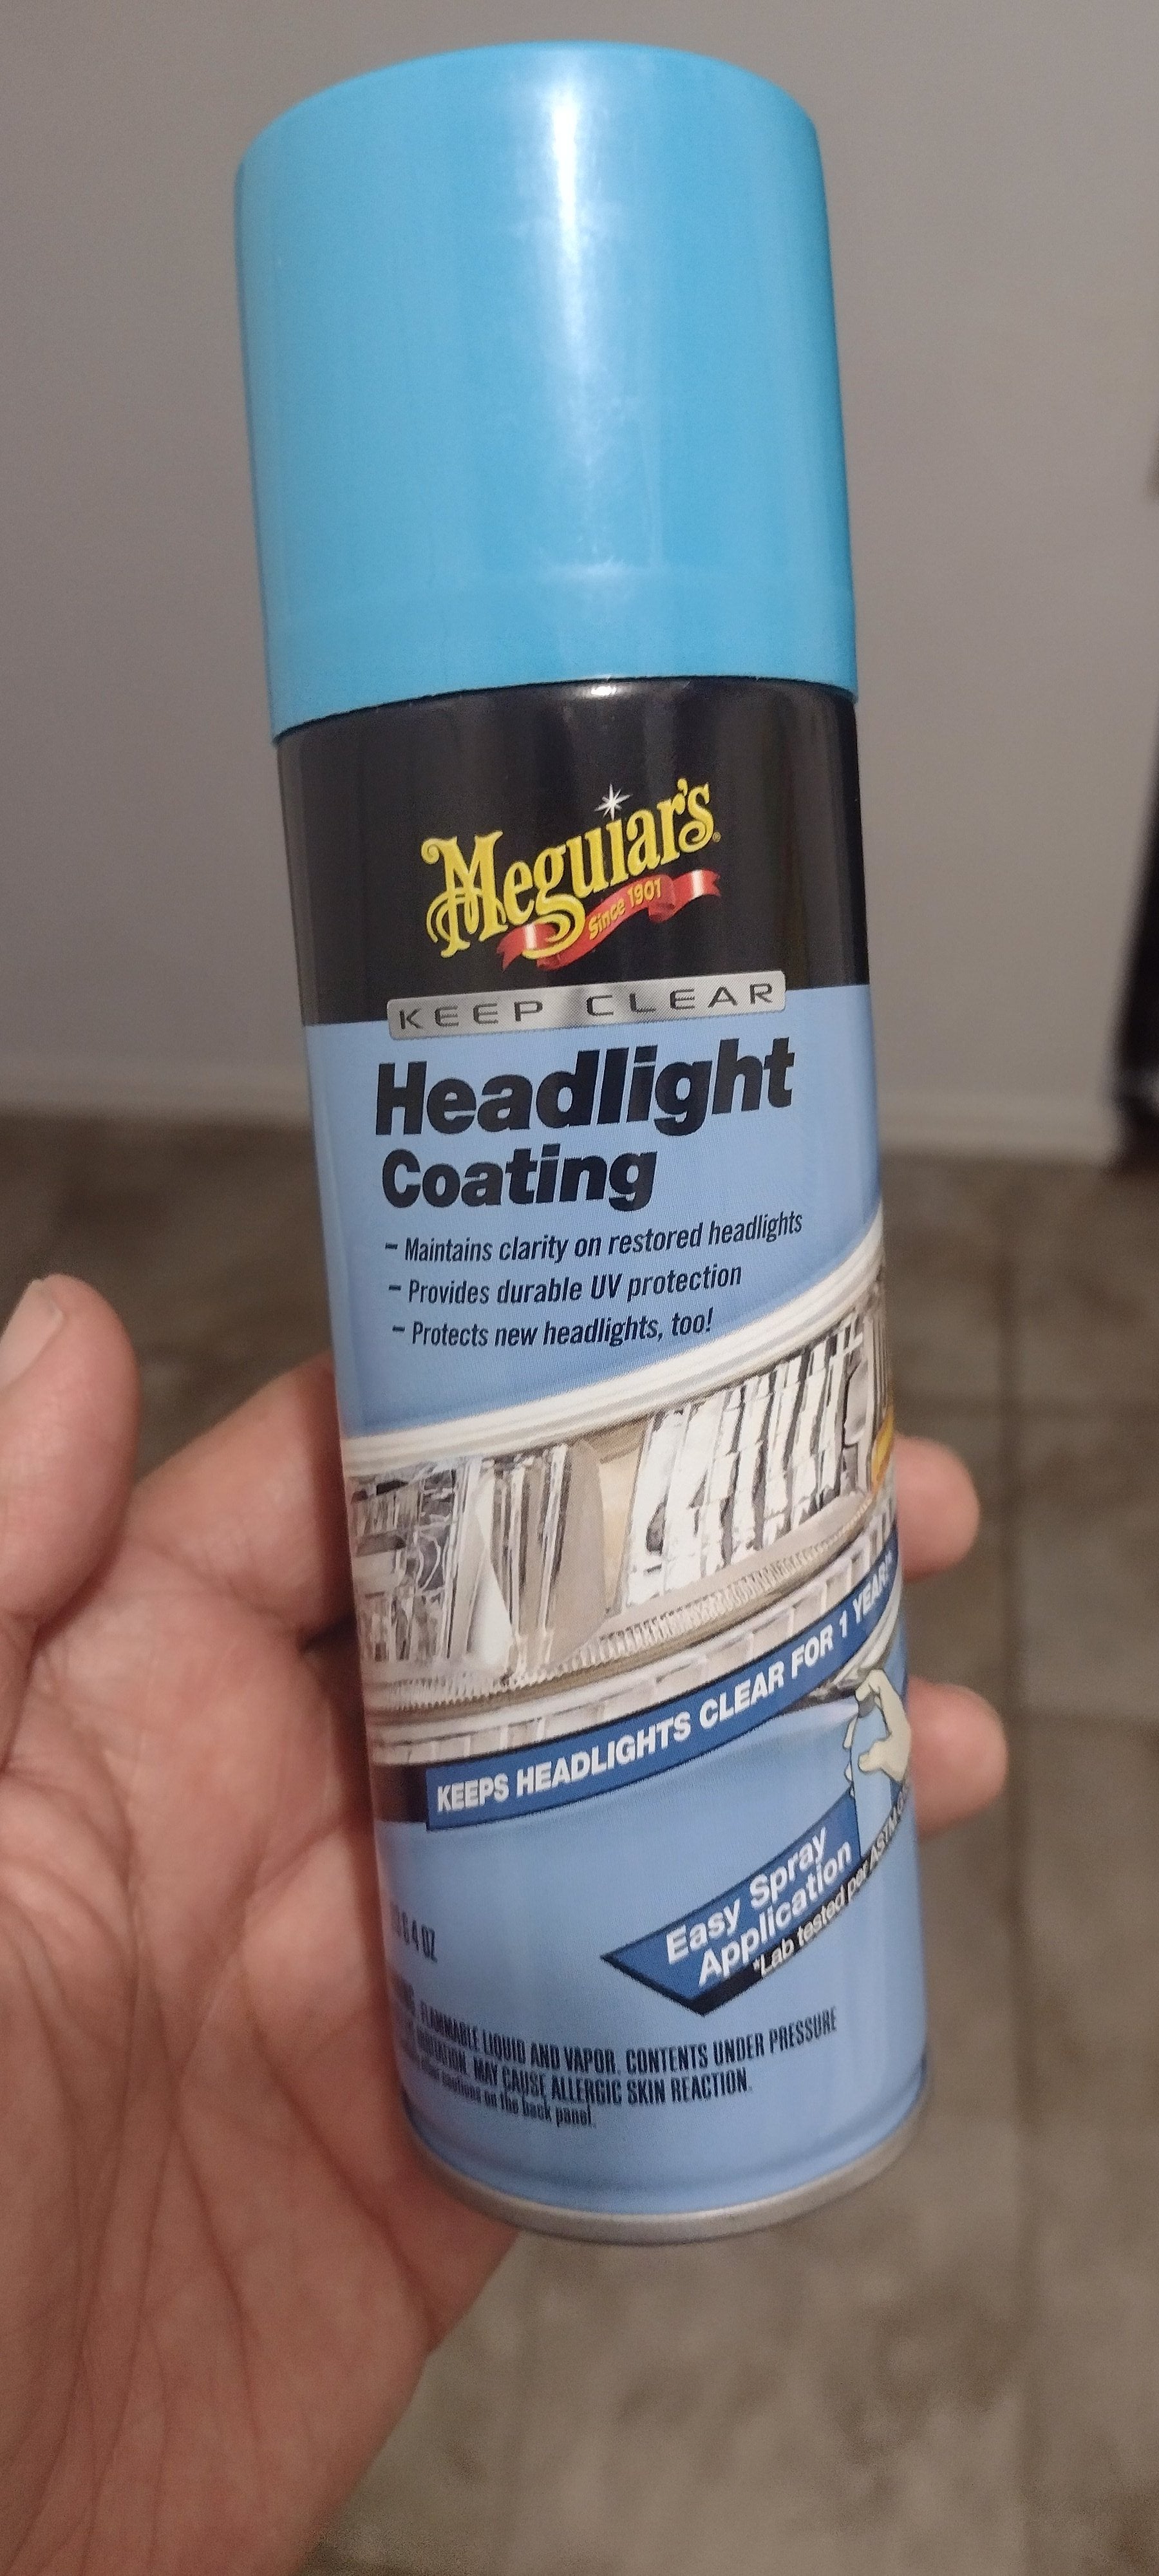 Headlights coating?